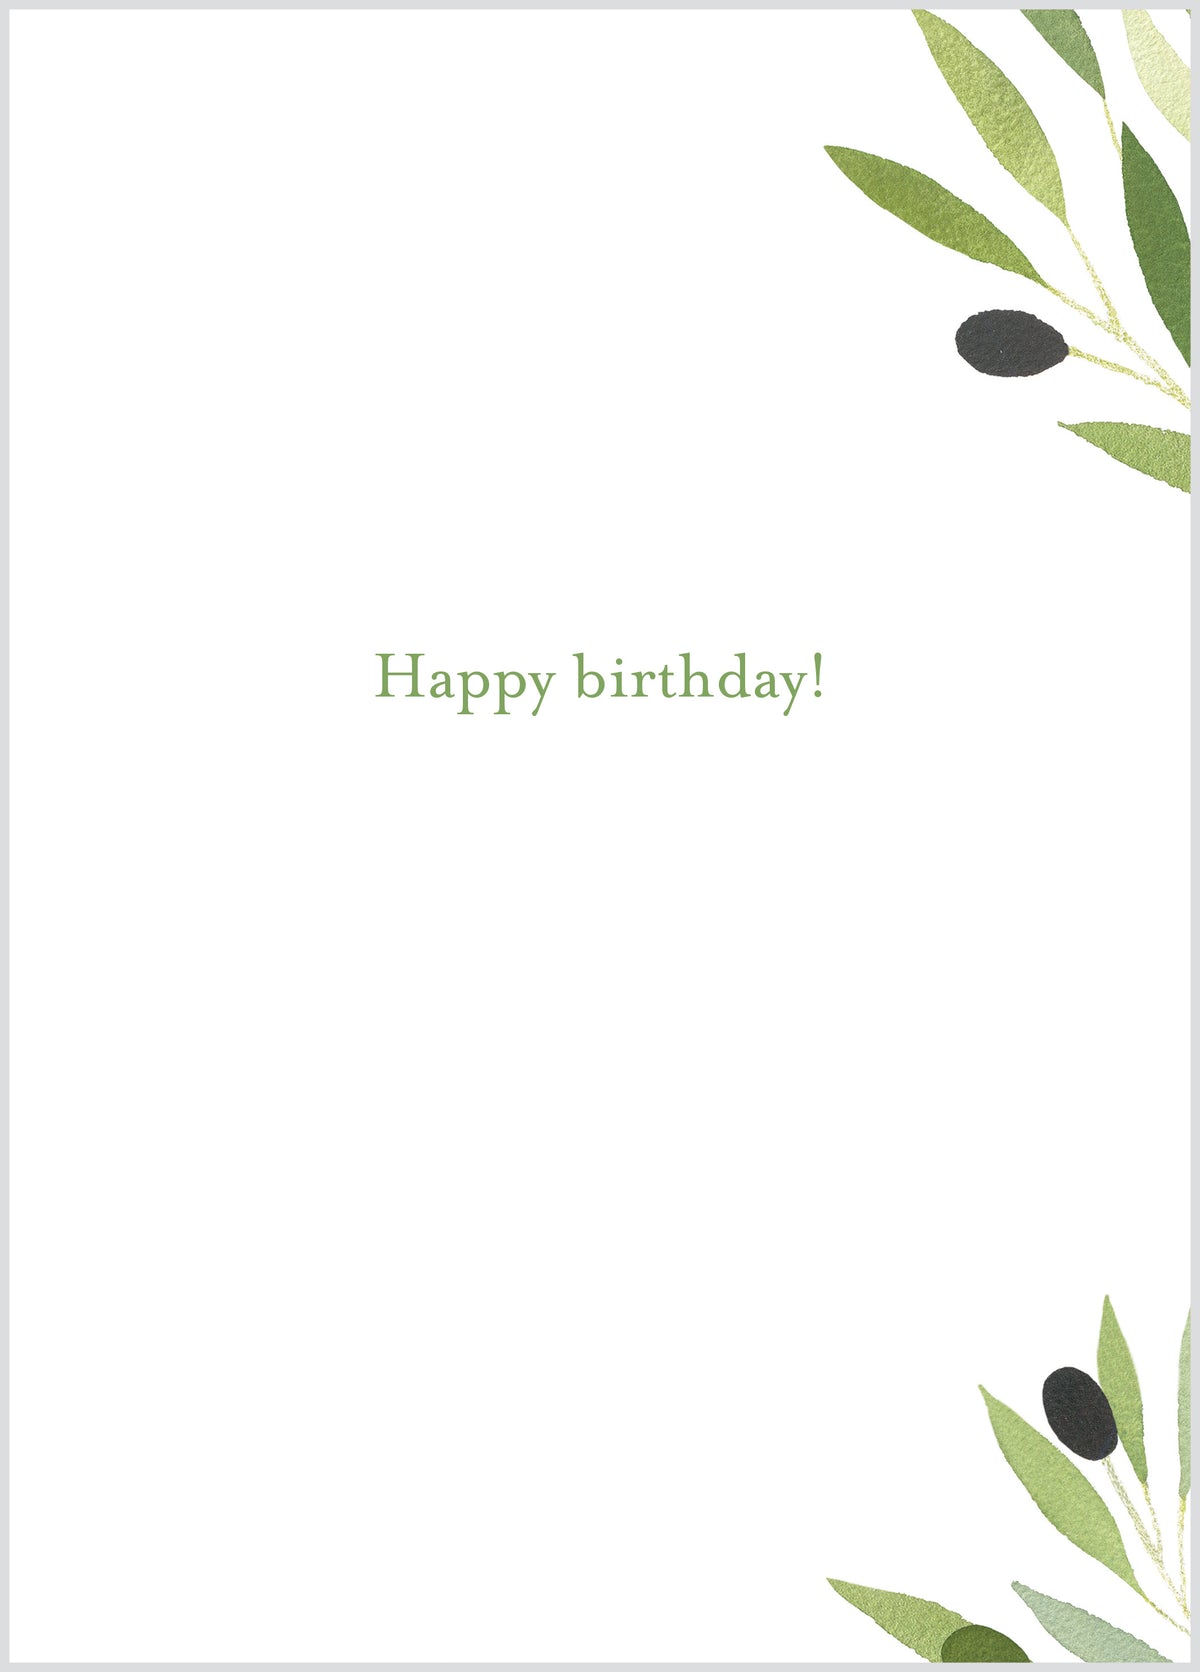 Olive Oil Birthday Card